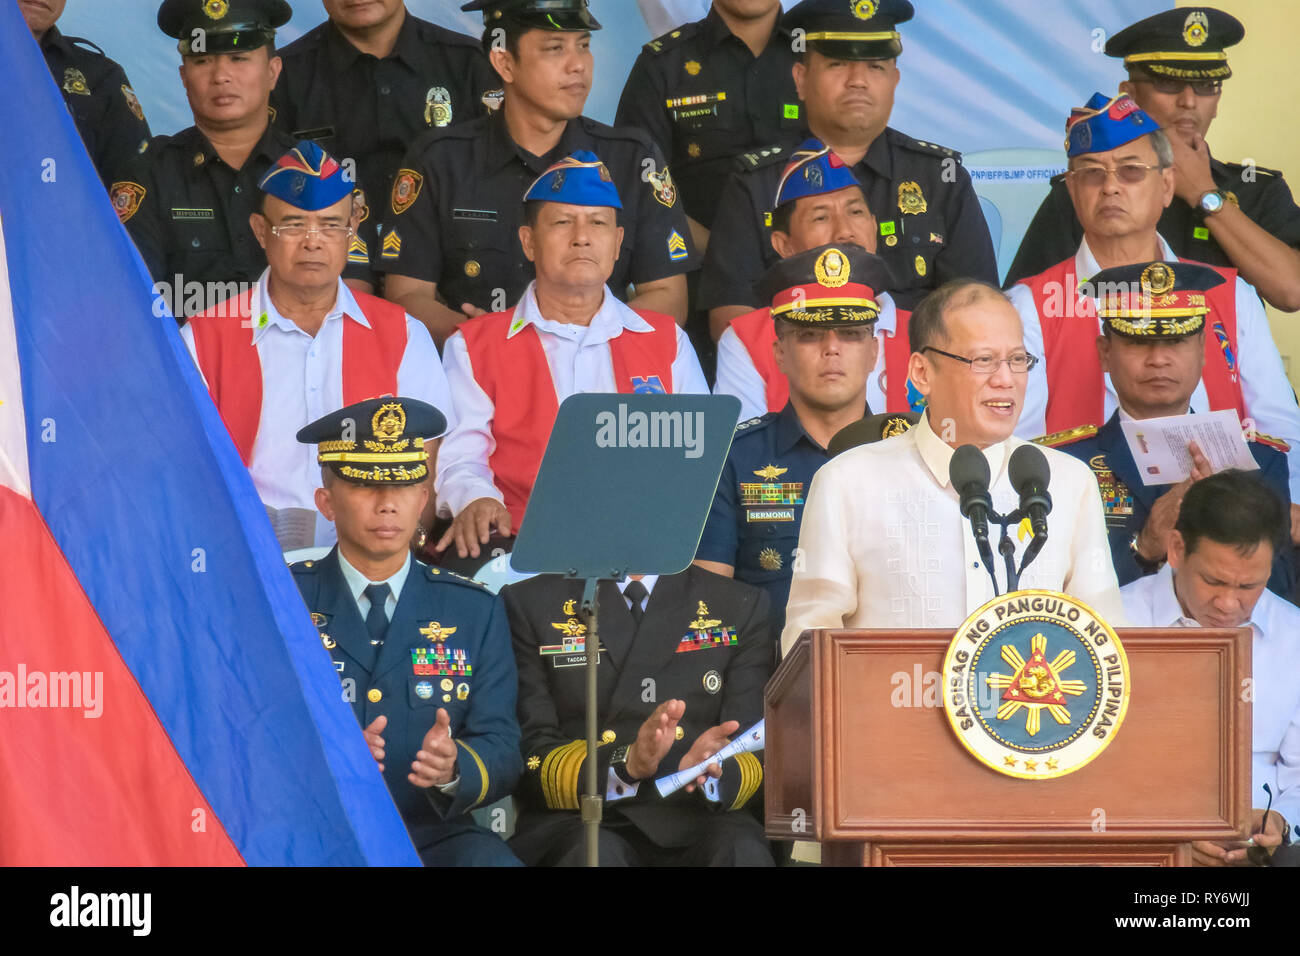 Benigno Aquino III, the 15th President of the Philippines, speaking near a Filipino flag at the 74th Bataan Day Anniversary - Mount Samat, Philippines Stock Photo